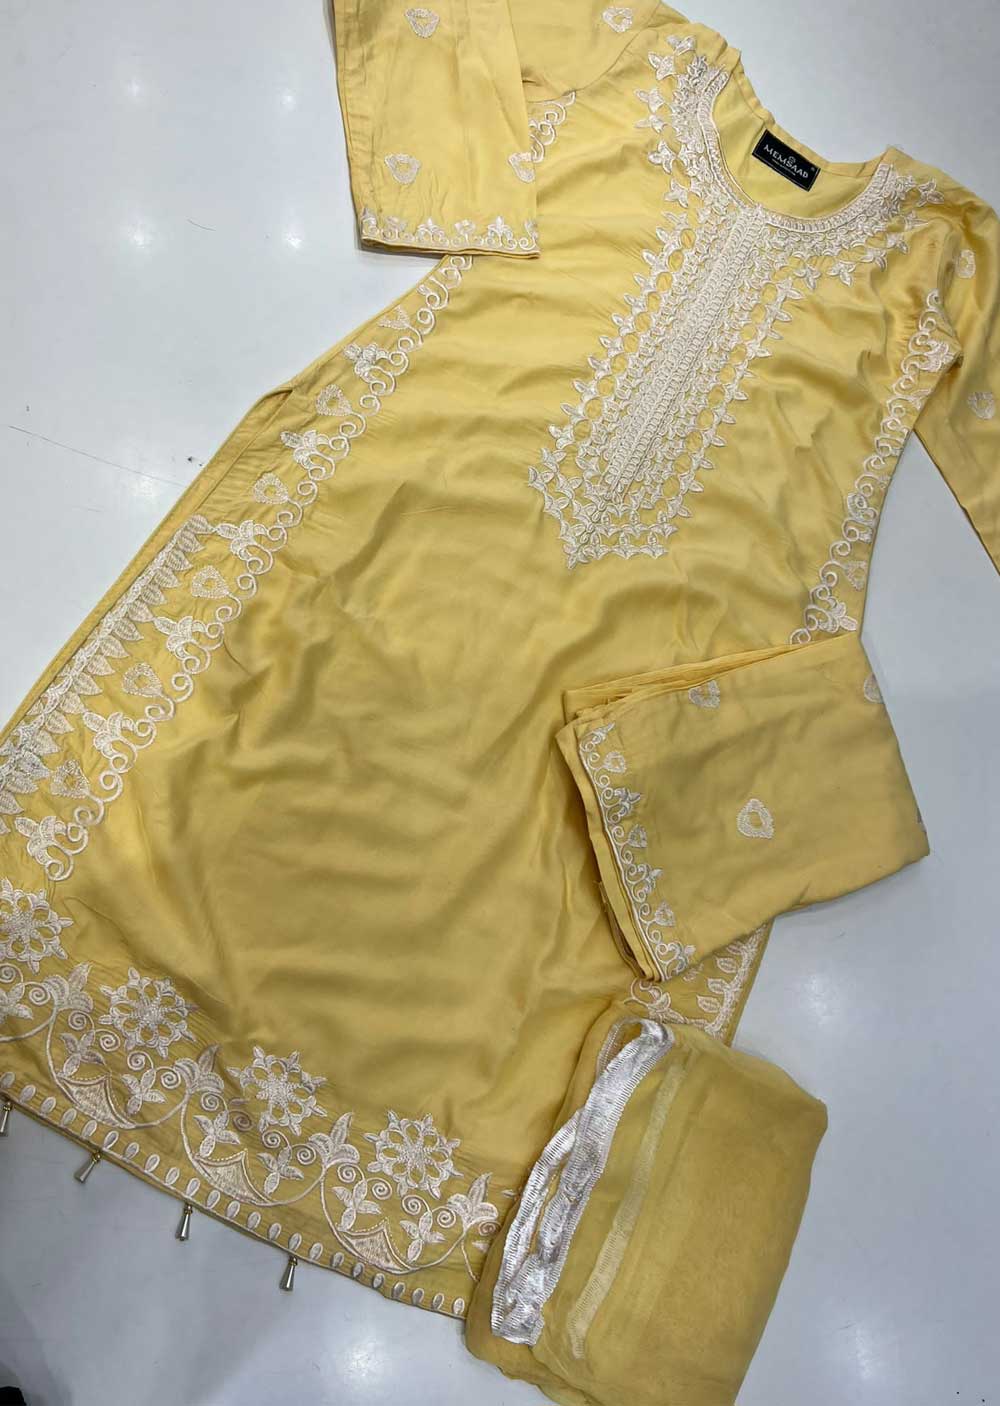 HK203 Sayasra Readymade Yellow Linen Suit - Memsaab Online